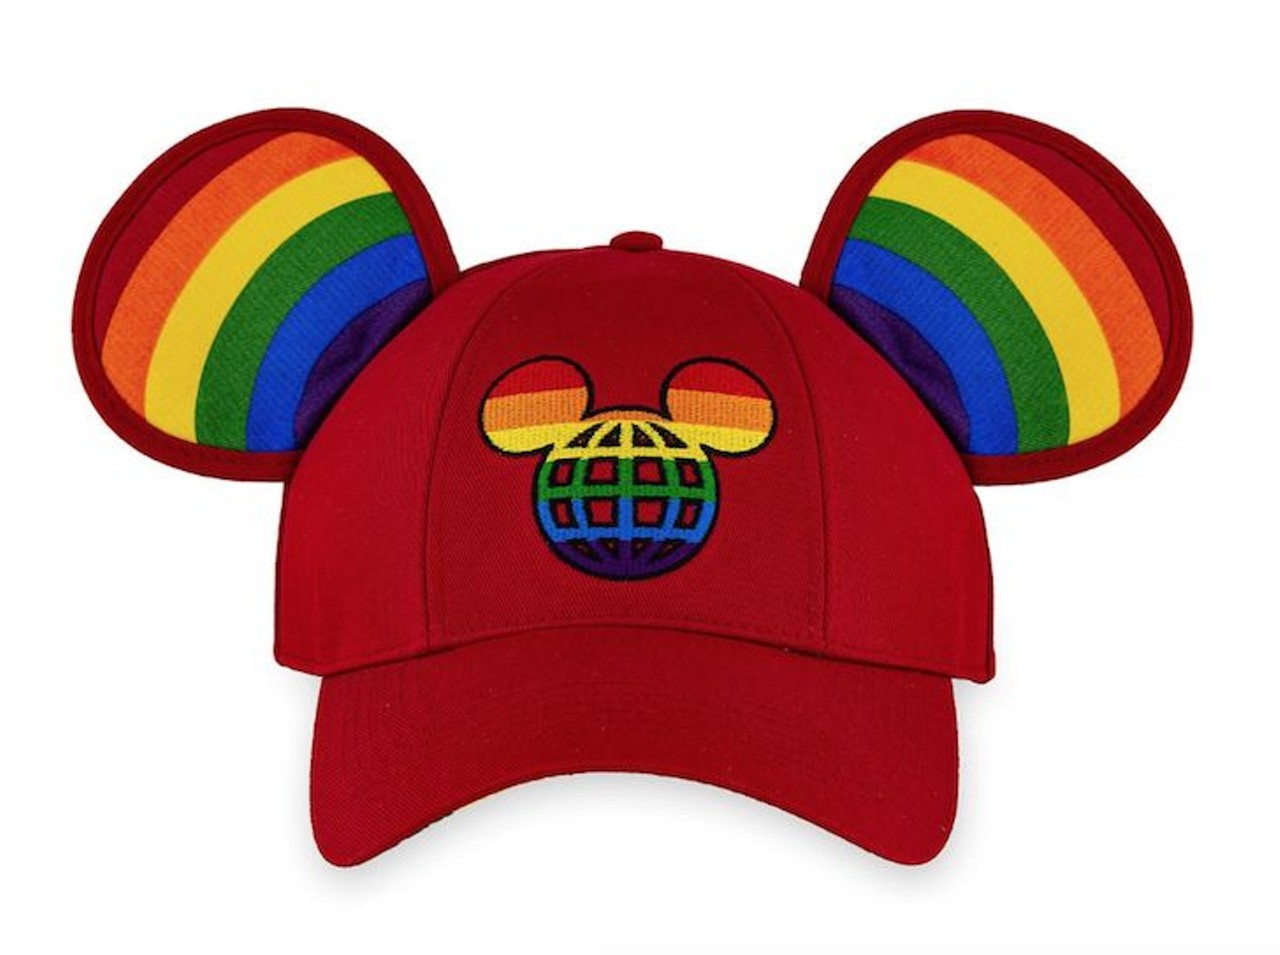 Mickey Mouse Ears Baseball Cap
A traditional baseball cap comes to life with rainbow padded Mickey Mouse ear, $27.99.
Photo via shopDisney